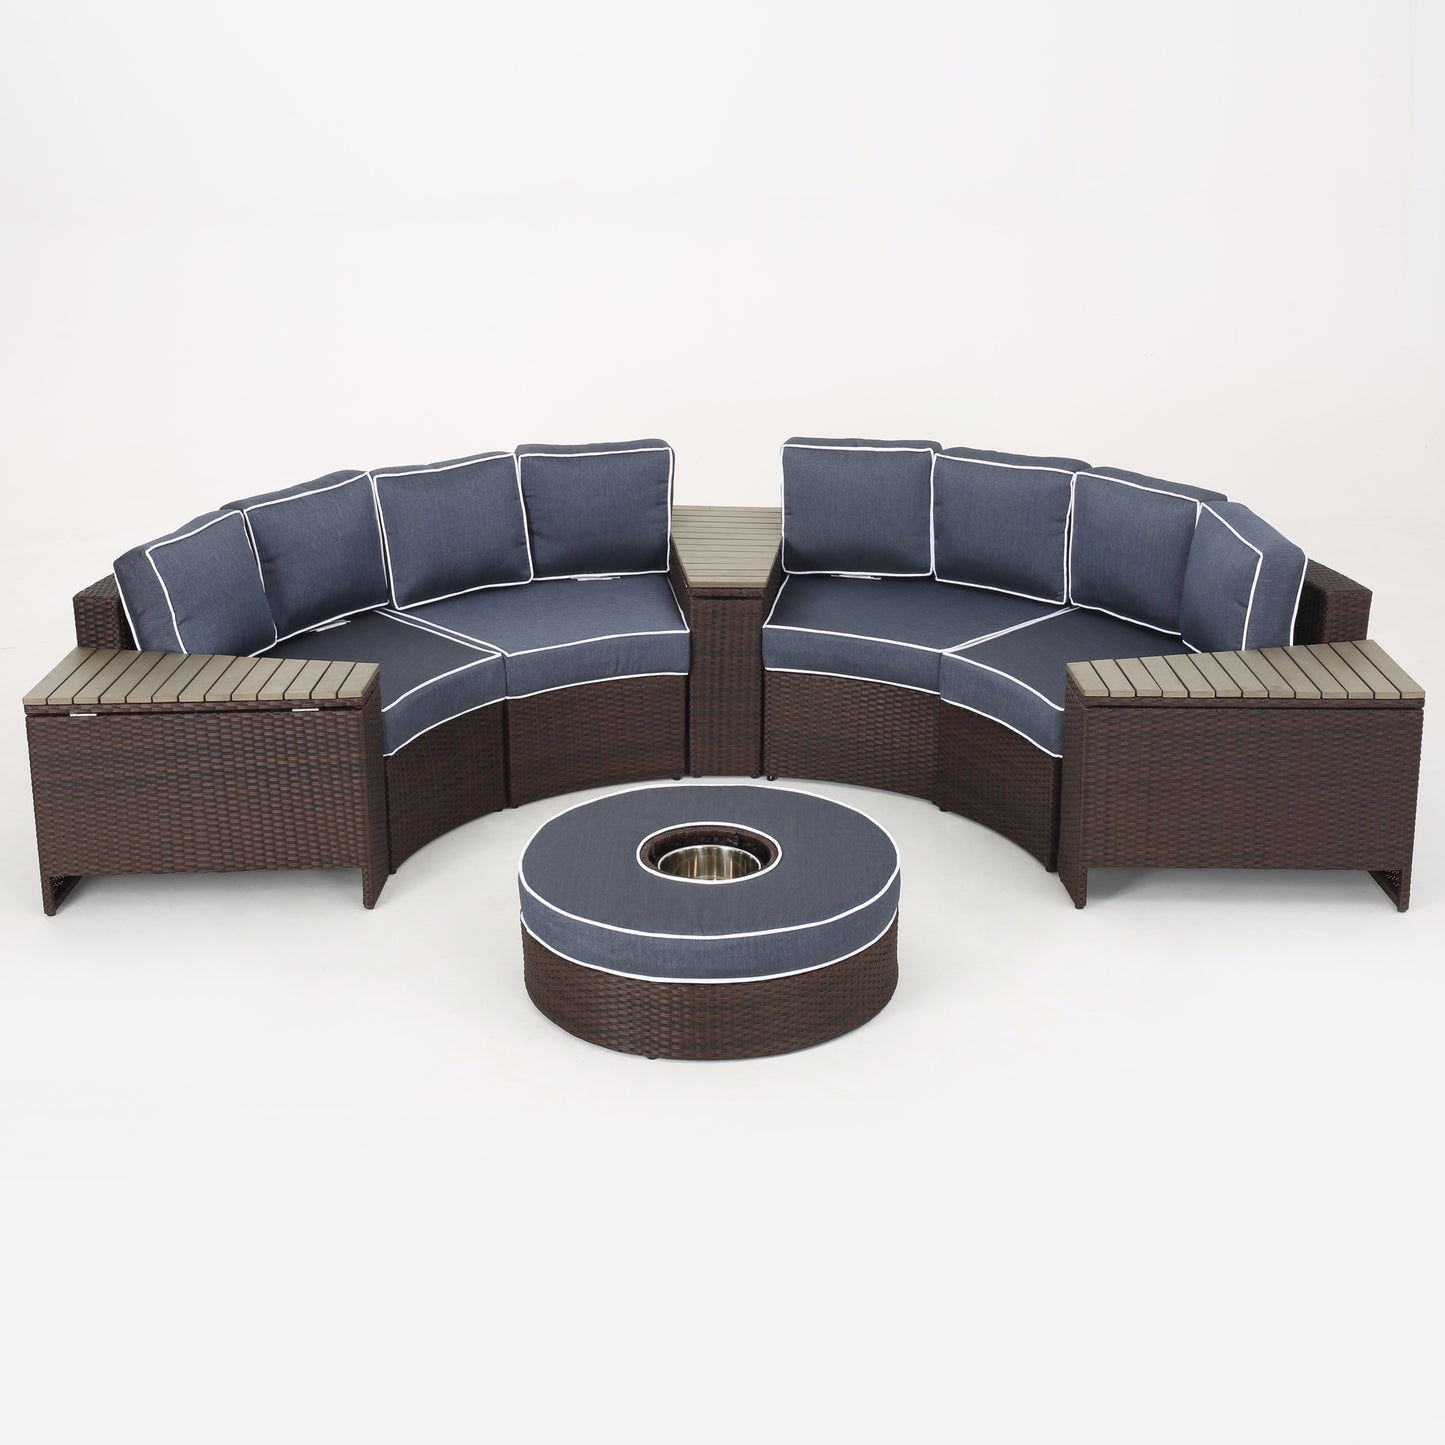 Riviera 8pc Outdoor Sectional Sofa Set w/ Storage Trunks & Ice Bucket